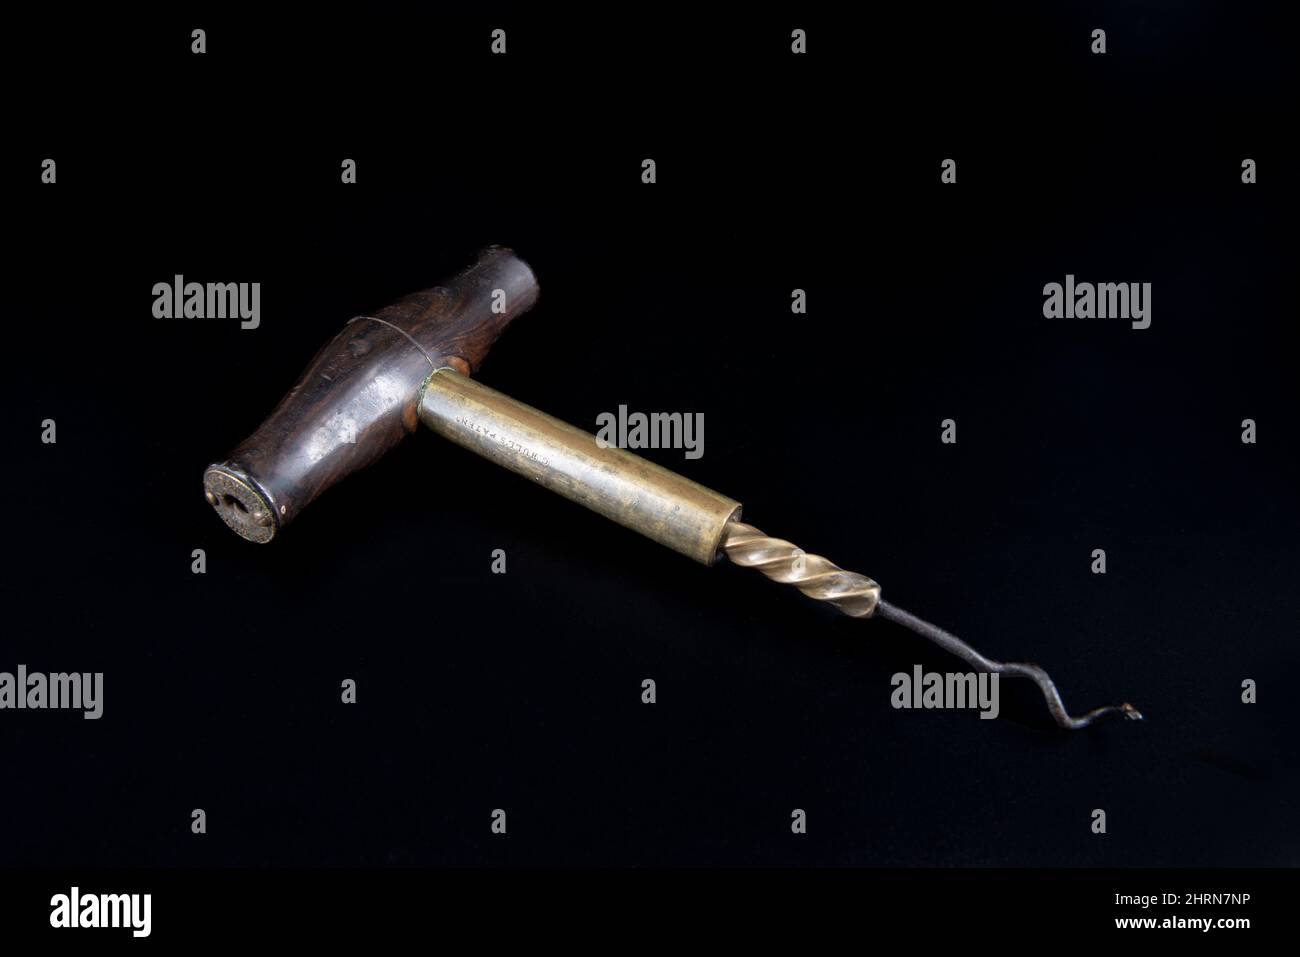 Vintage antique corkscrew on black background Stock Photo